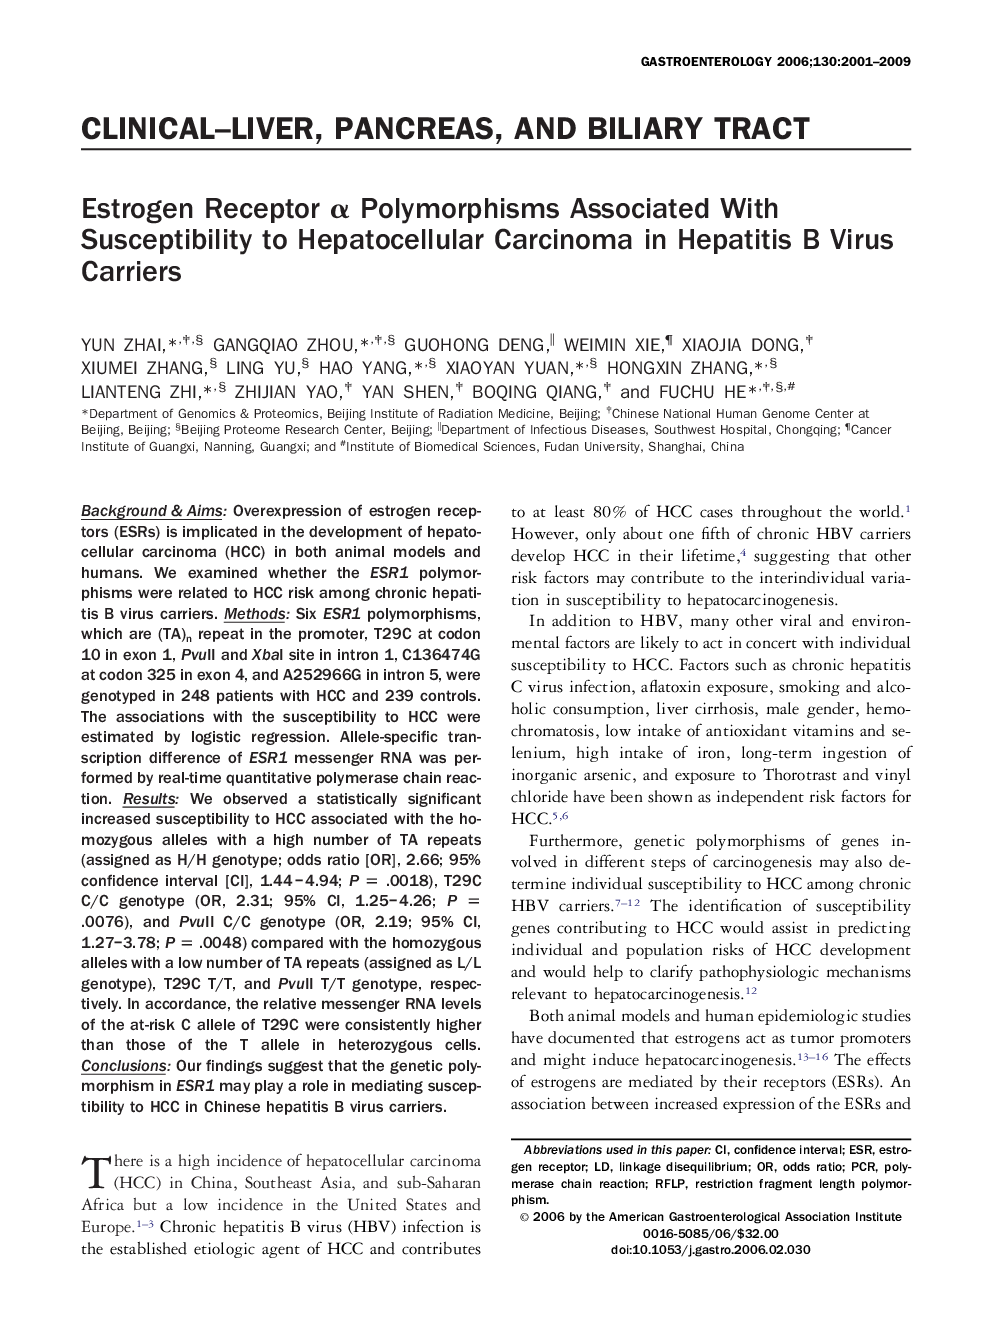 Estrogen Receptor α Polymorphisms Associated With Susceptibility to Hepatocellular Carcinoma in Hepatitis B Virus Carriers 